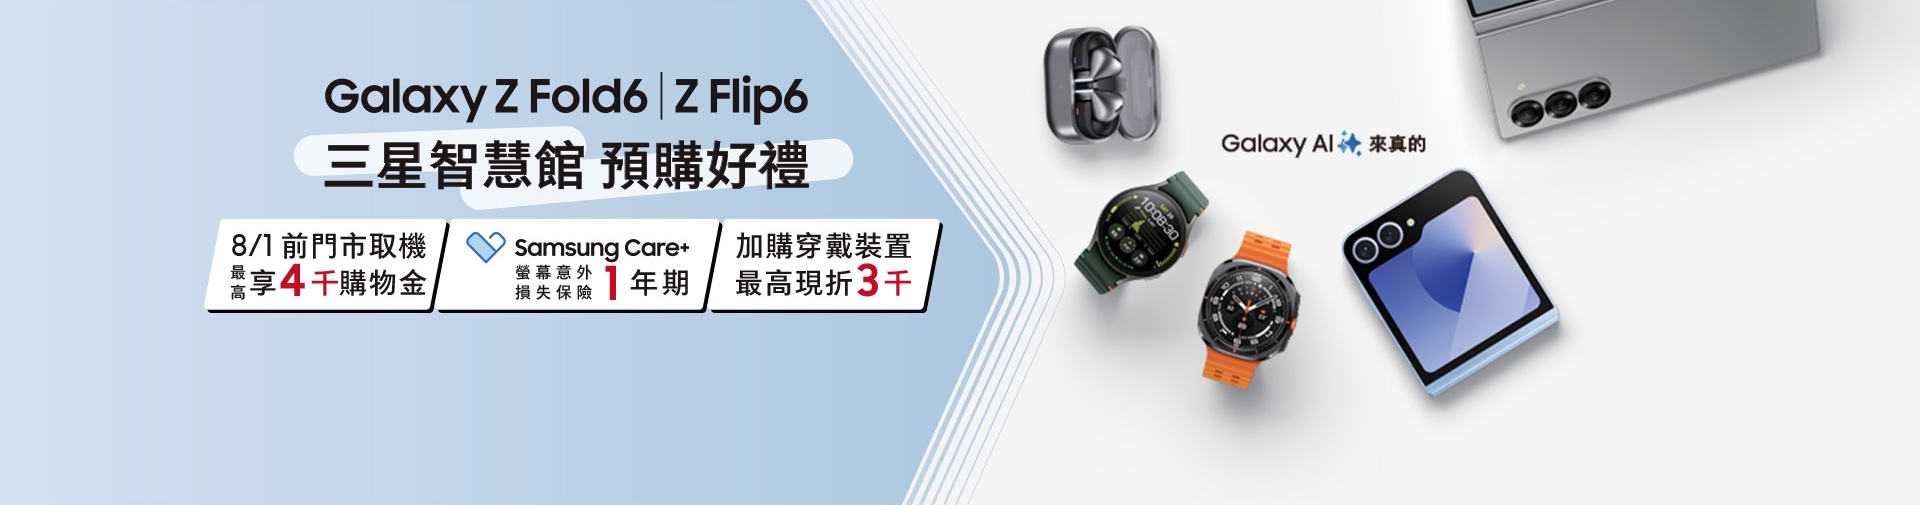 Galaxy Z fold6|Z Flip6 三星智慧館 預購好禮